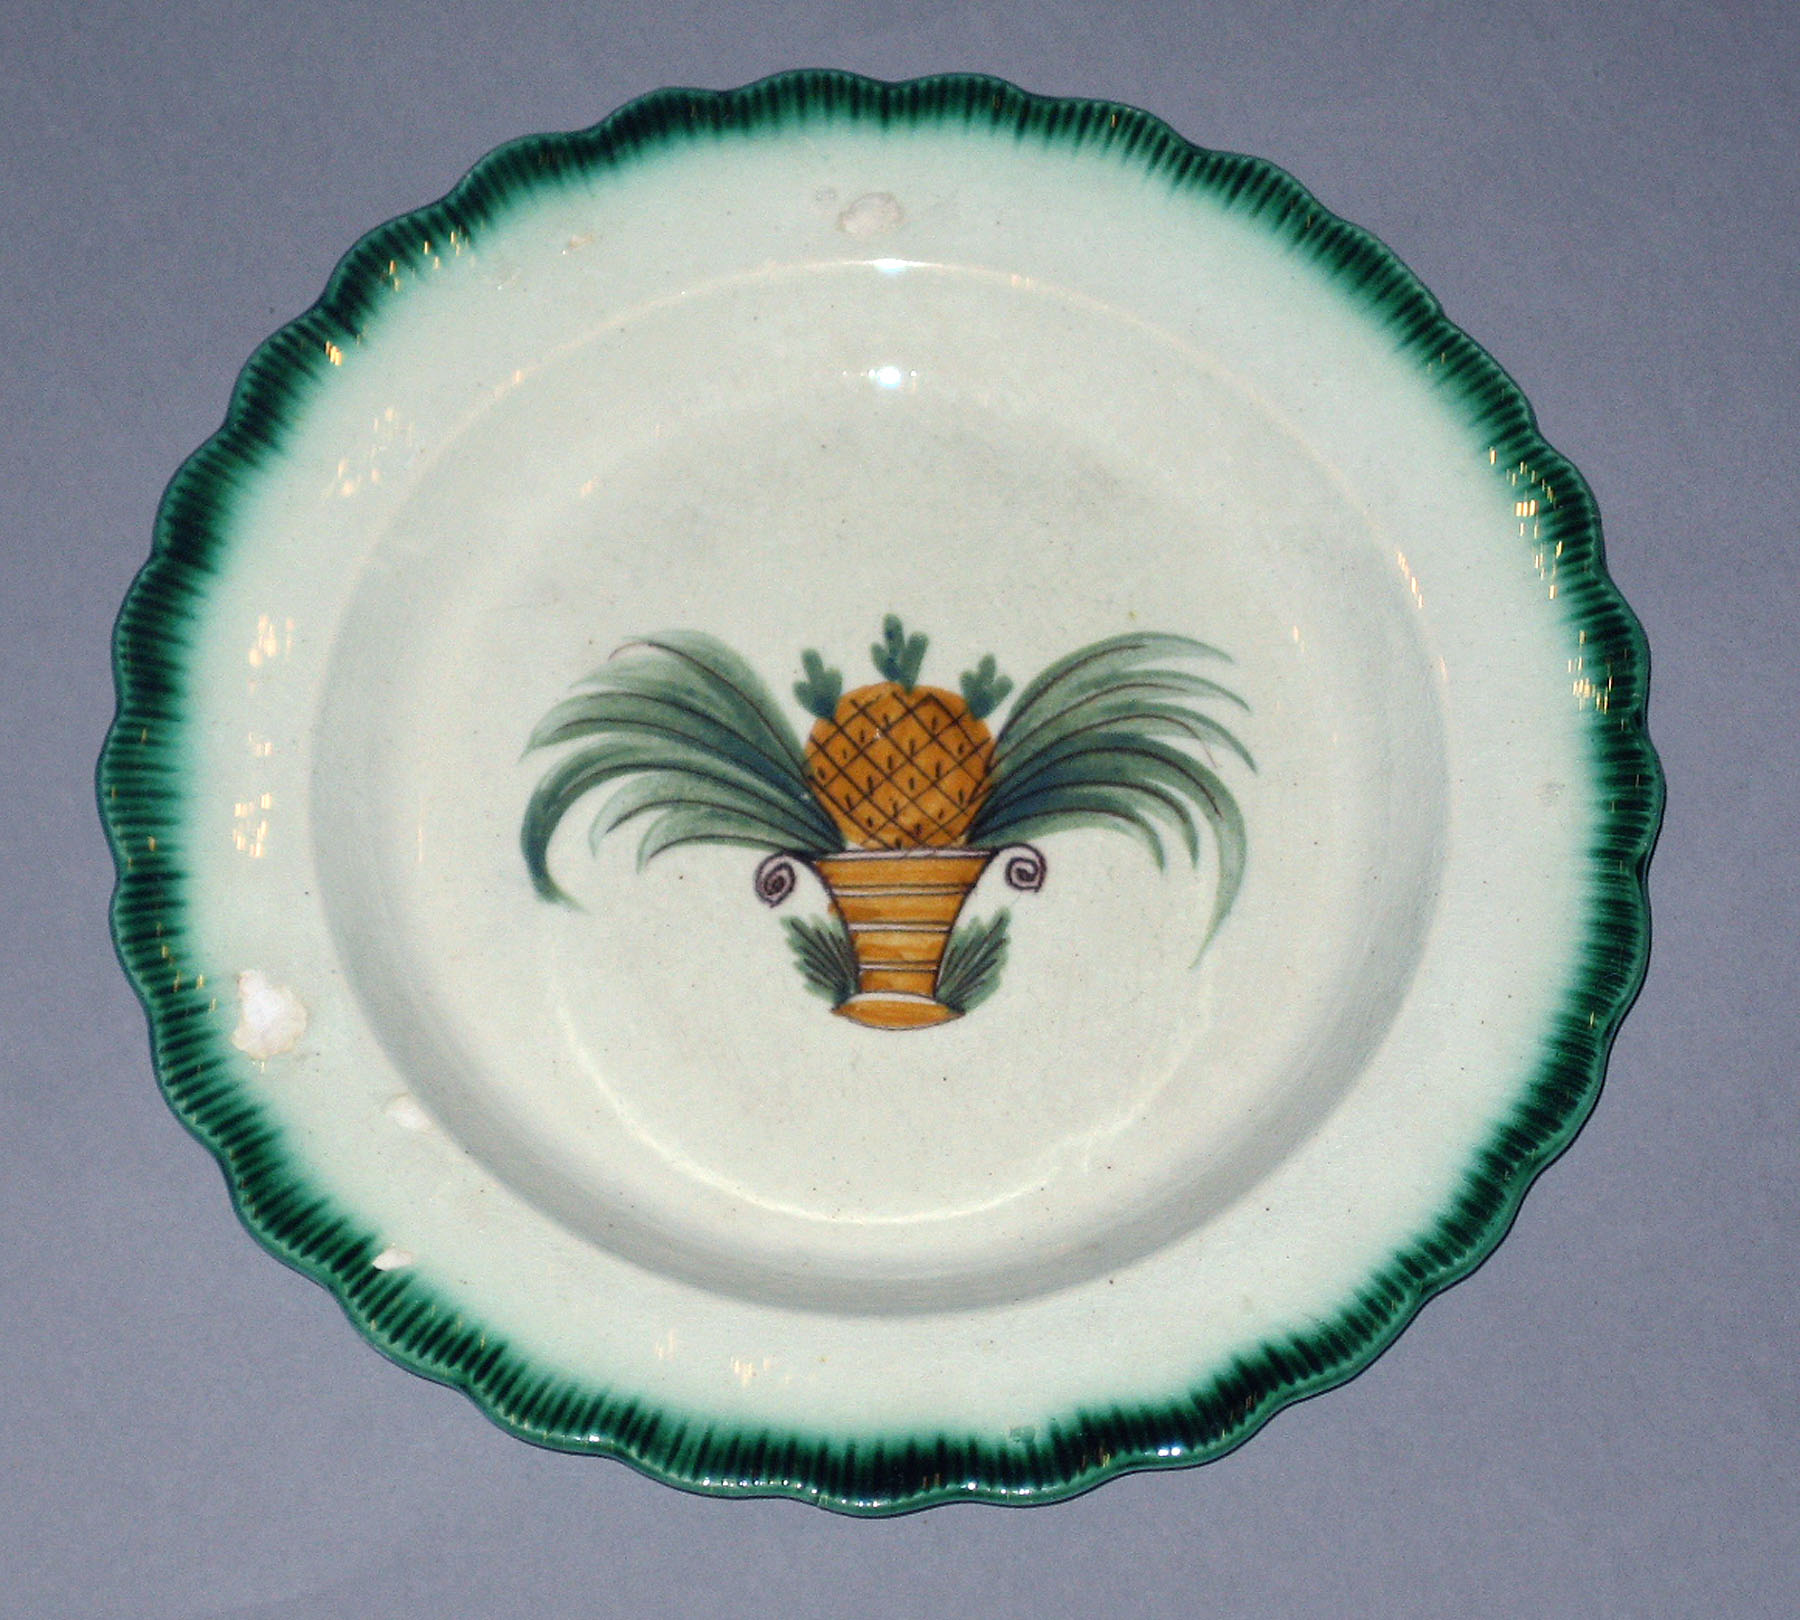 1964.1967.002 Pearlware plate